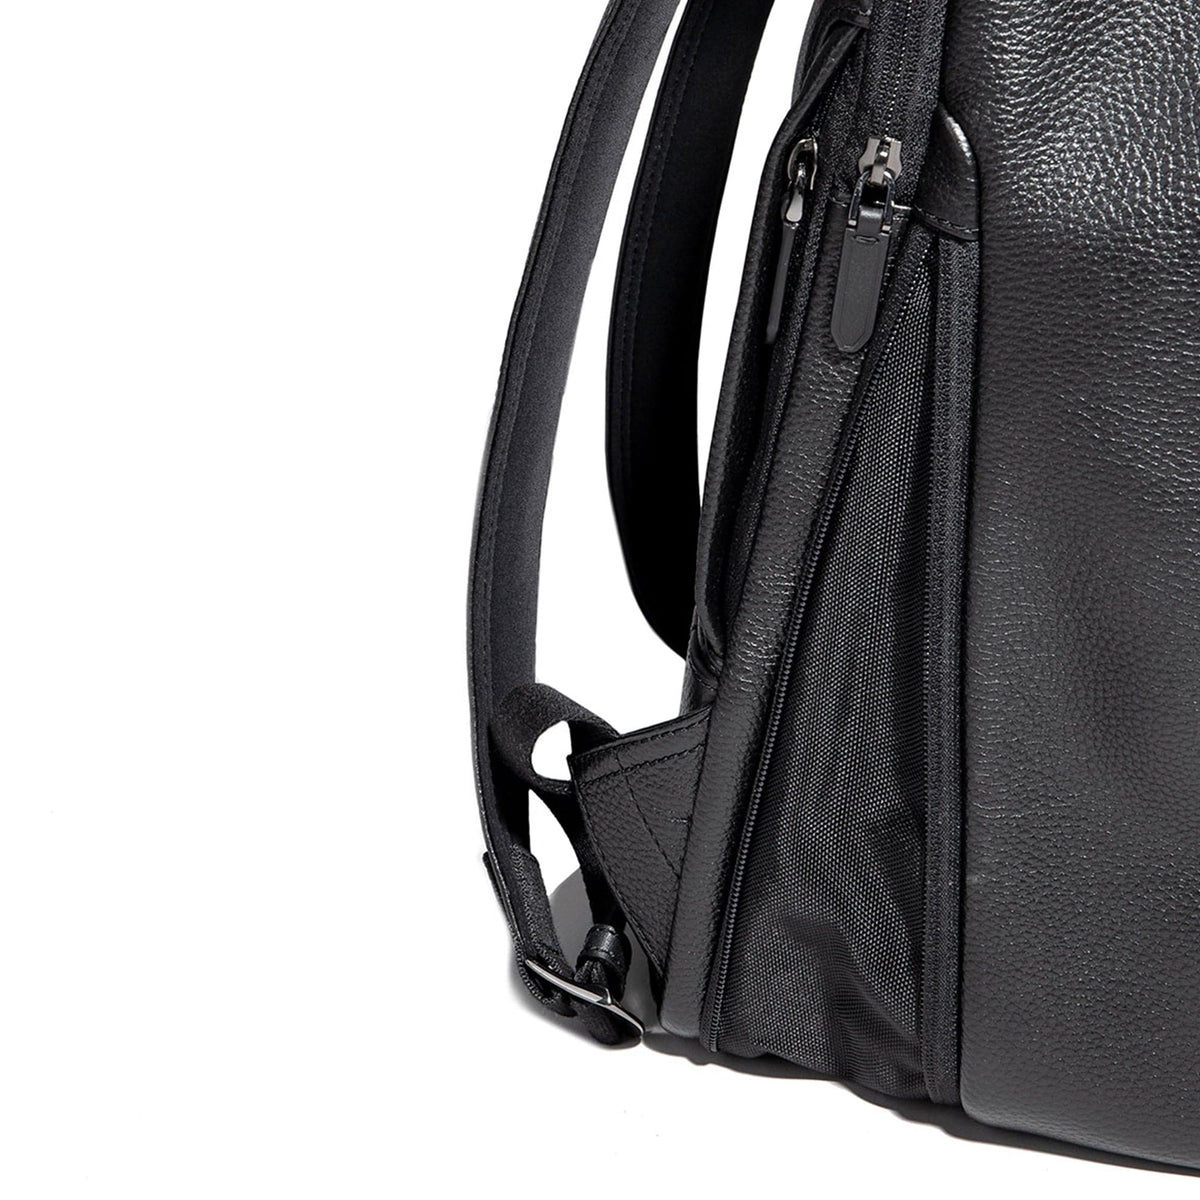 Hook & Albert Leather Backpack